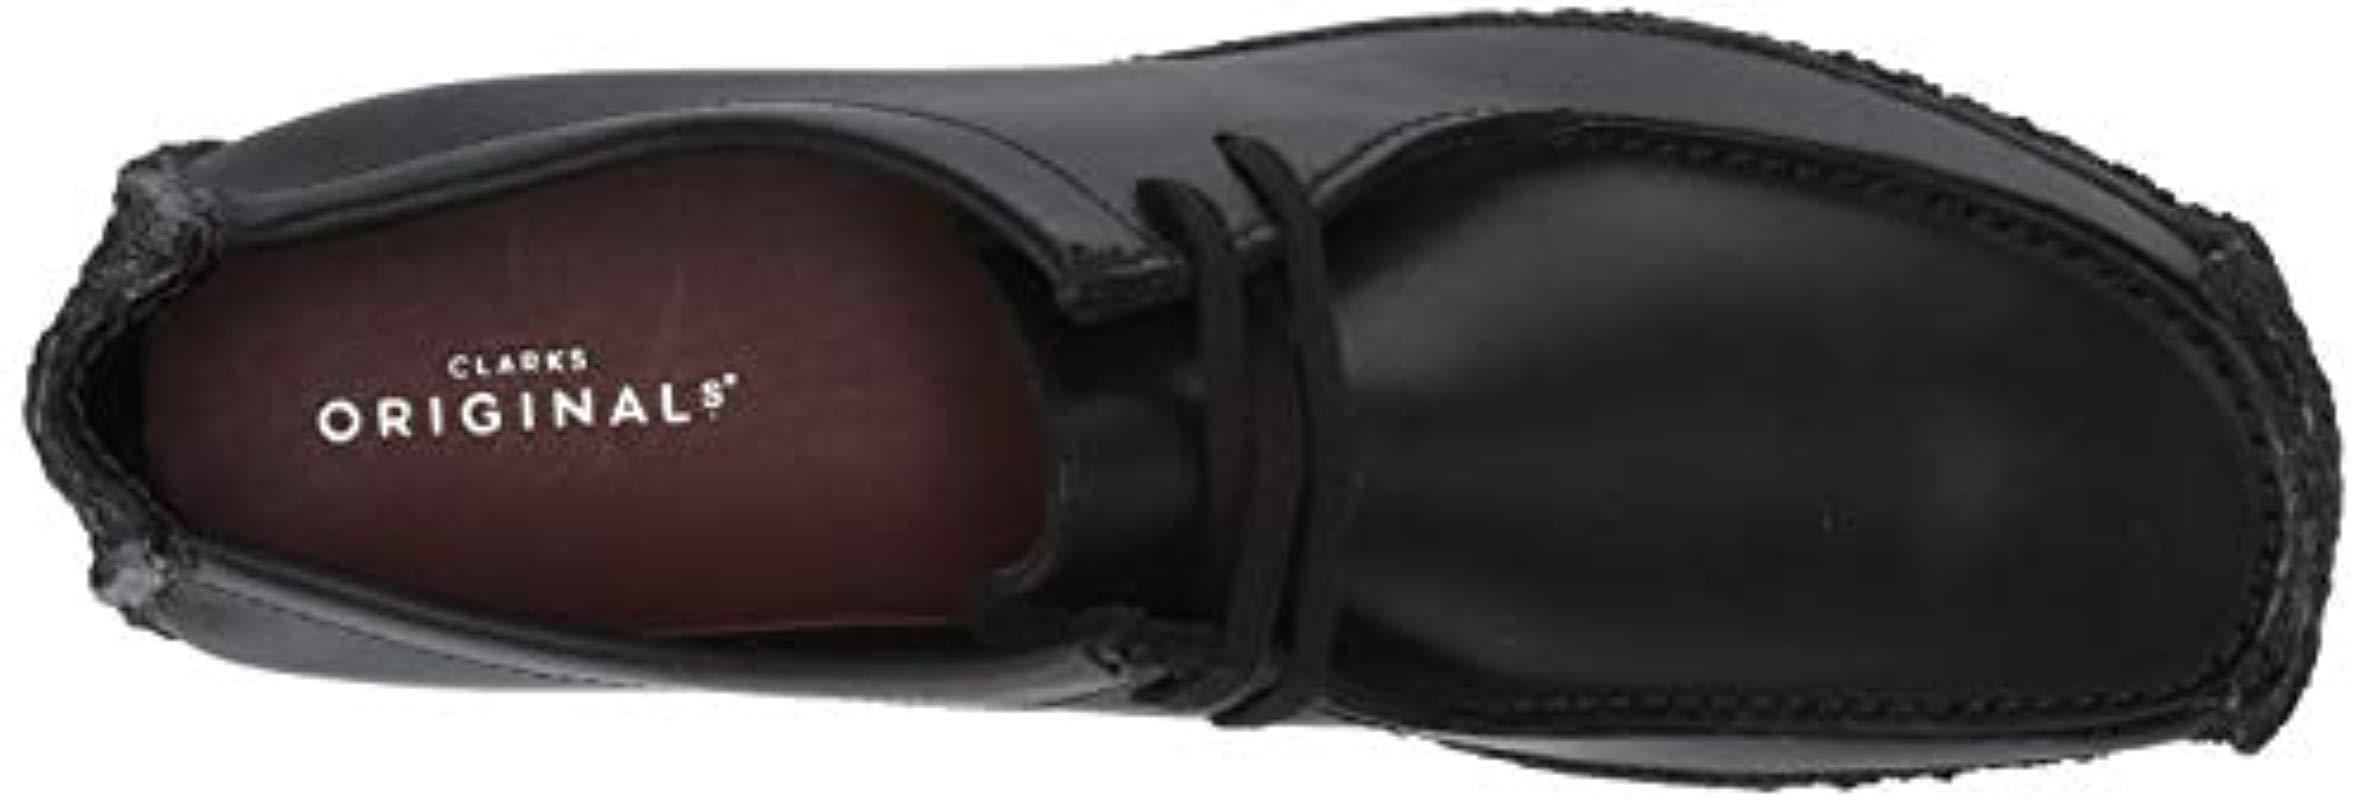 Clarks Leather Natalie Moccasin in Black Leather (Black) for Men - Save 7%  | Lyst